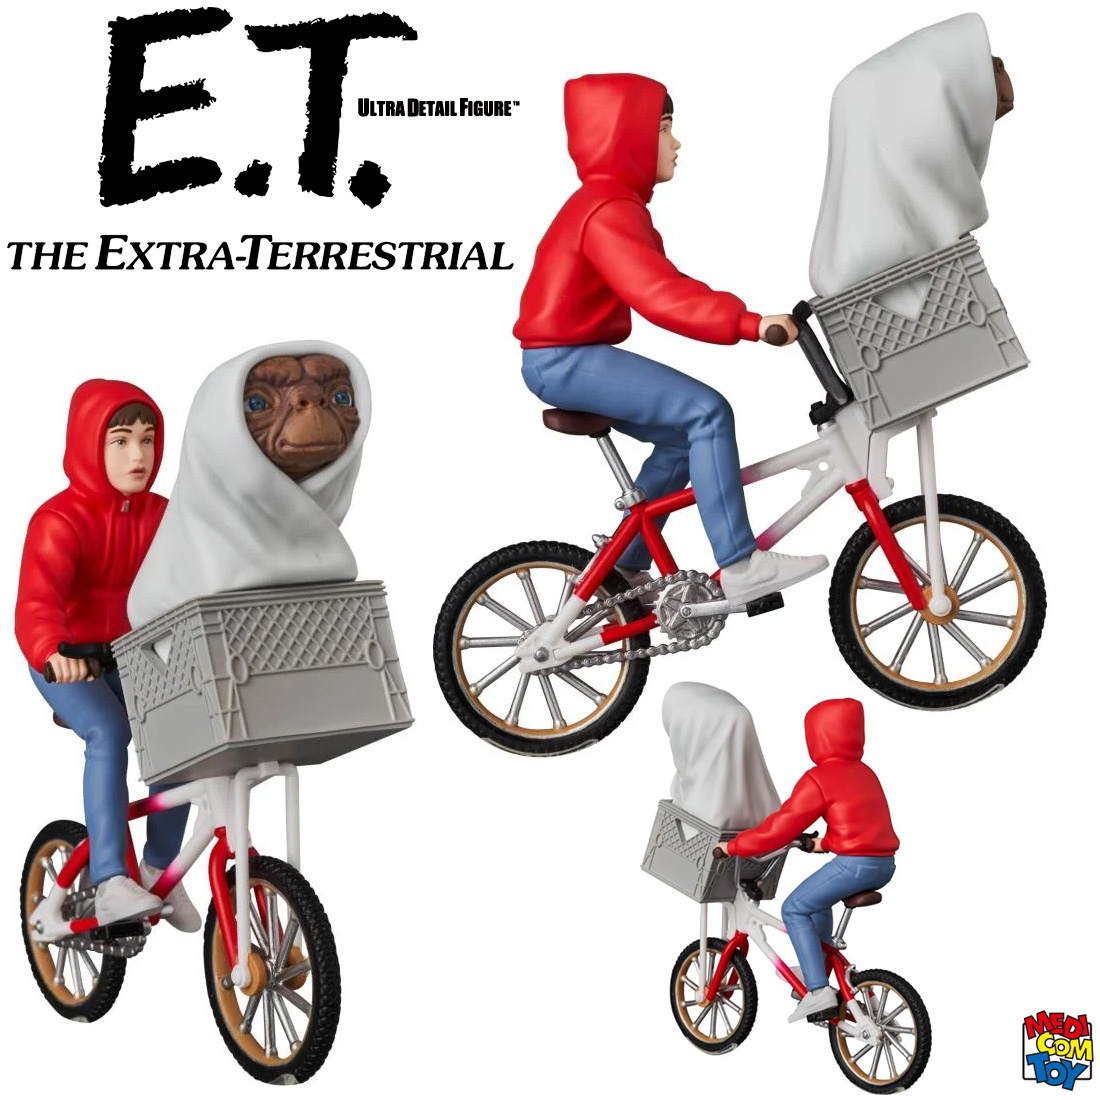 Mini-Figura E.T. Extraterrestre e Elliot na Bicicleta UDF (Ultra Detail Figure)